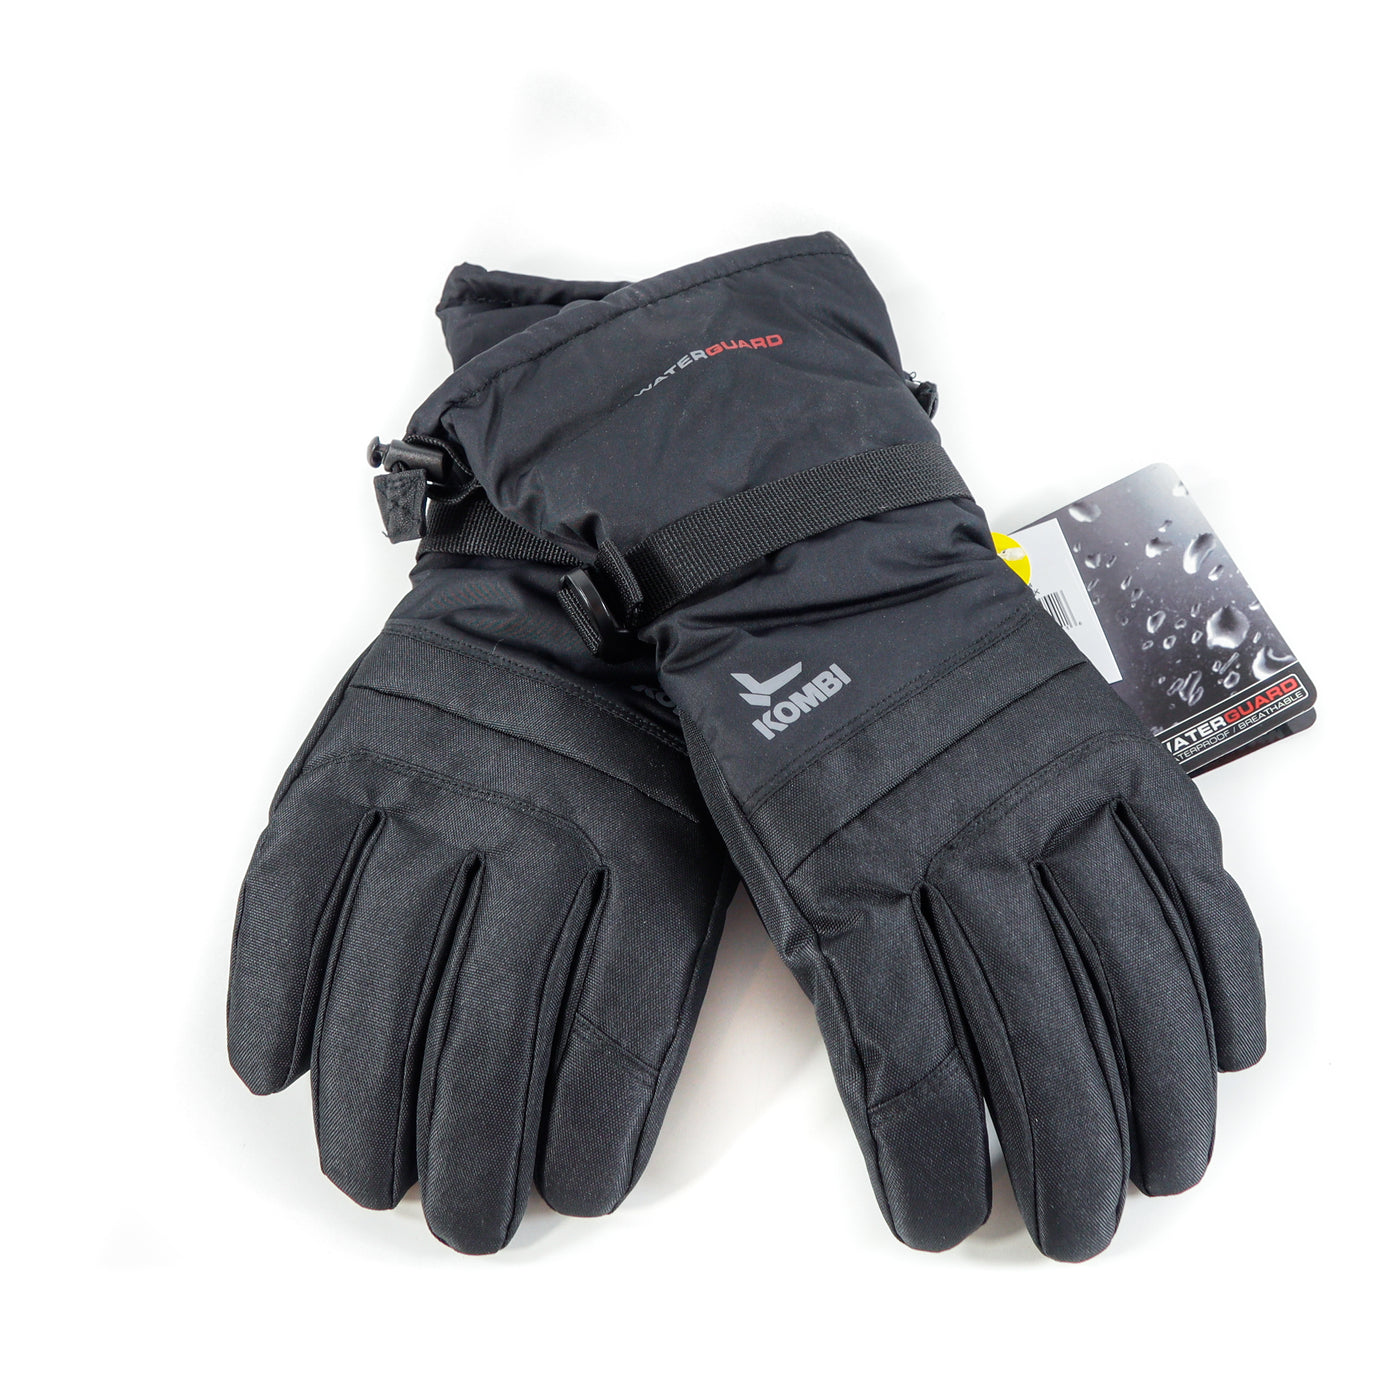 Kombi Waterguard Gloves - Women's APPAREL Kombi Small  